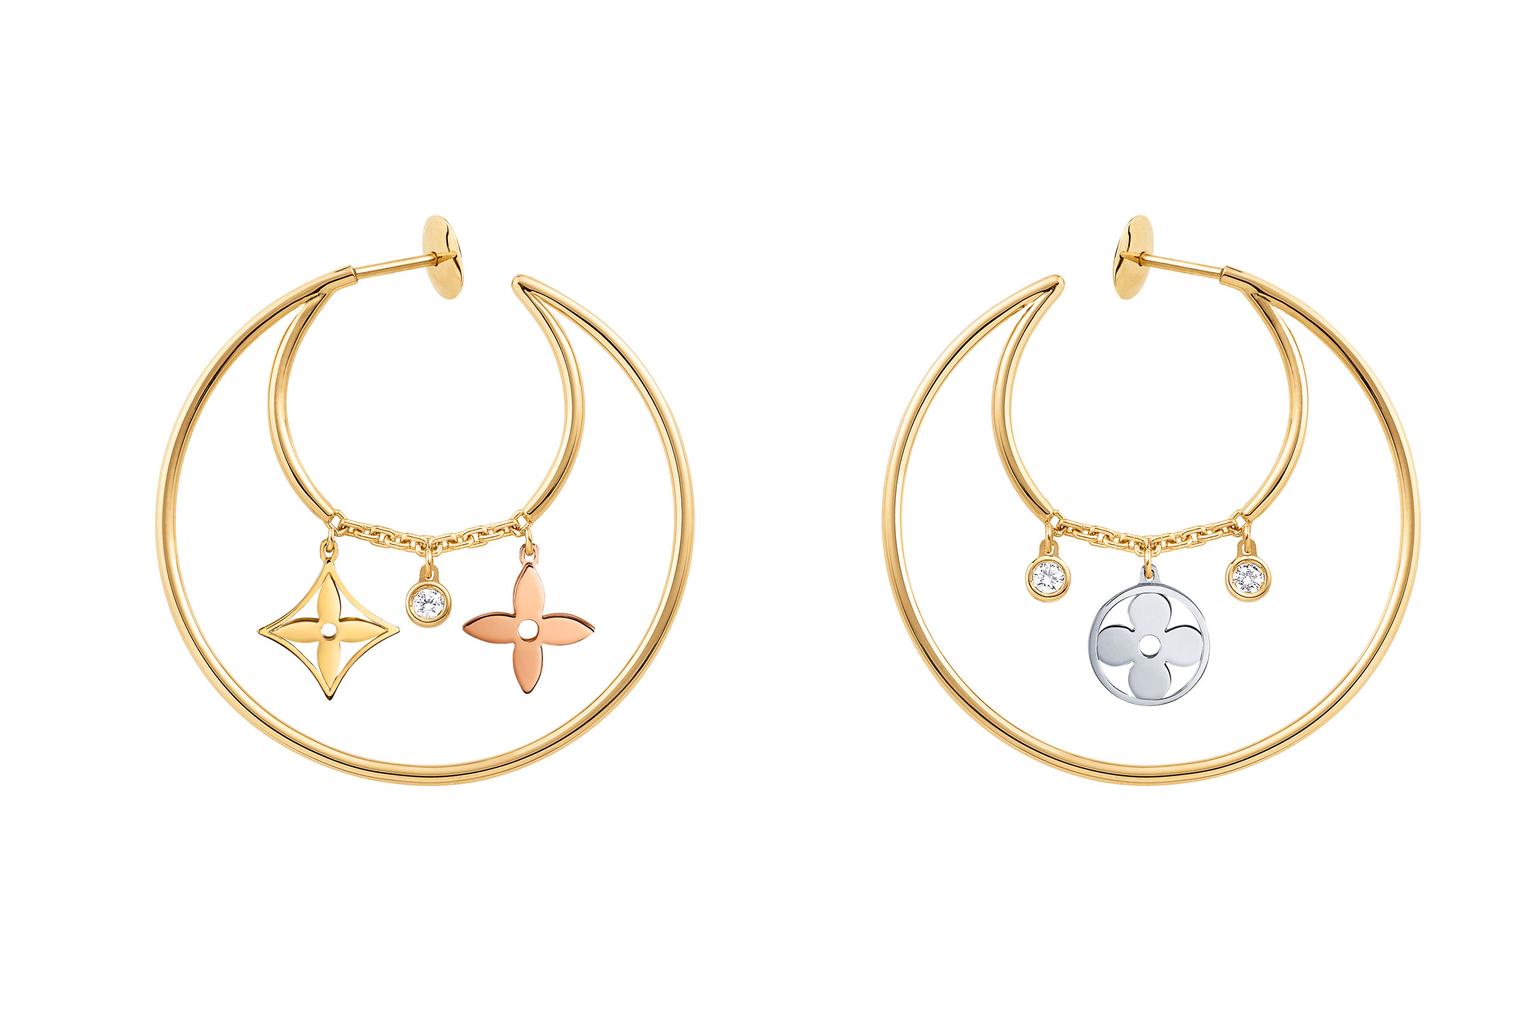 Louis Vuitton White Gold and Diamond Hoop Earrings